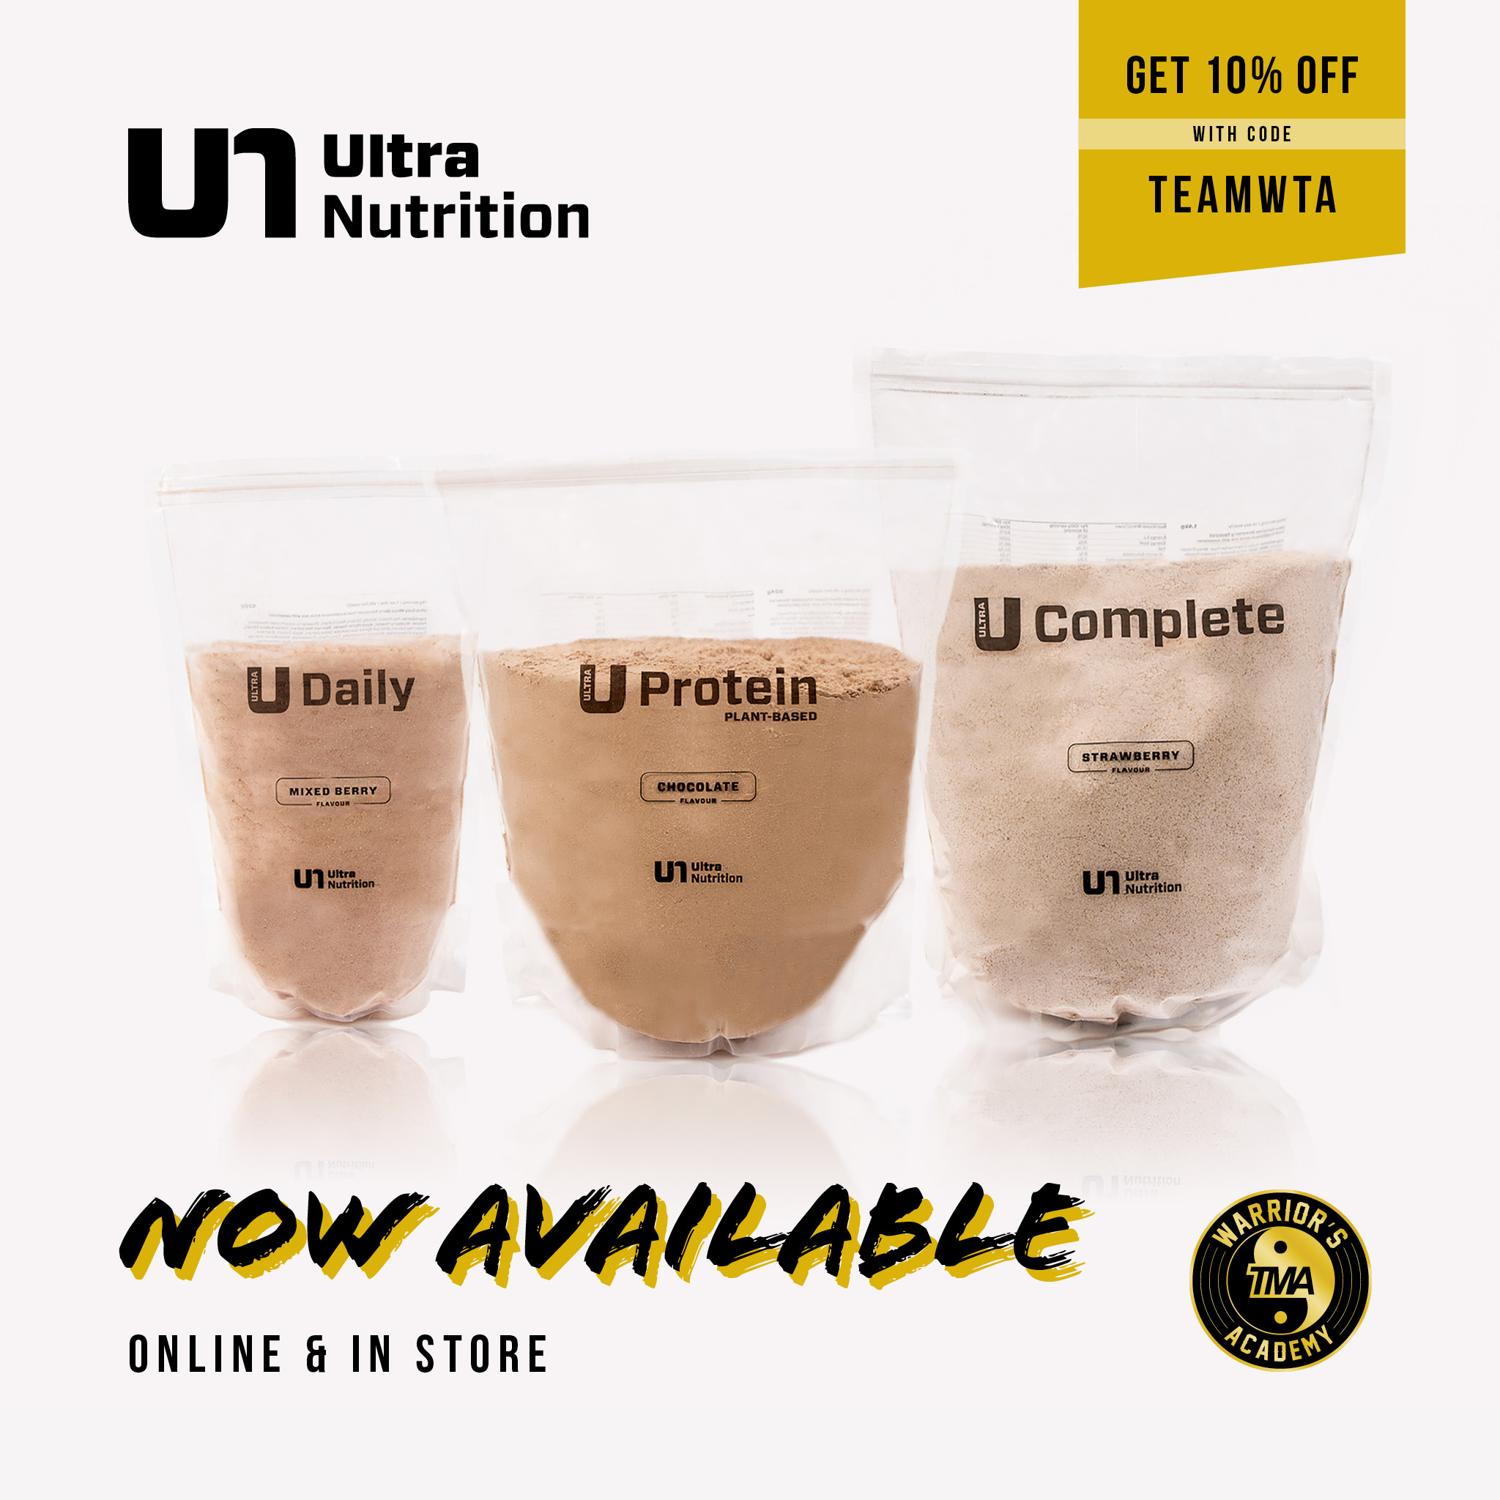 Ultra Nutrition 10% discount using code TEAMWTA